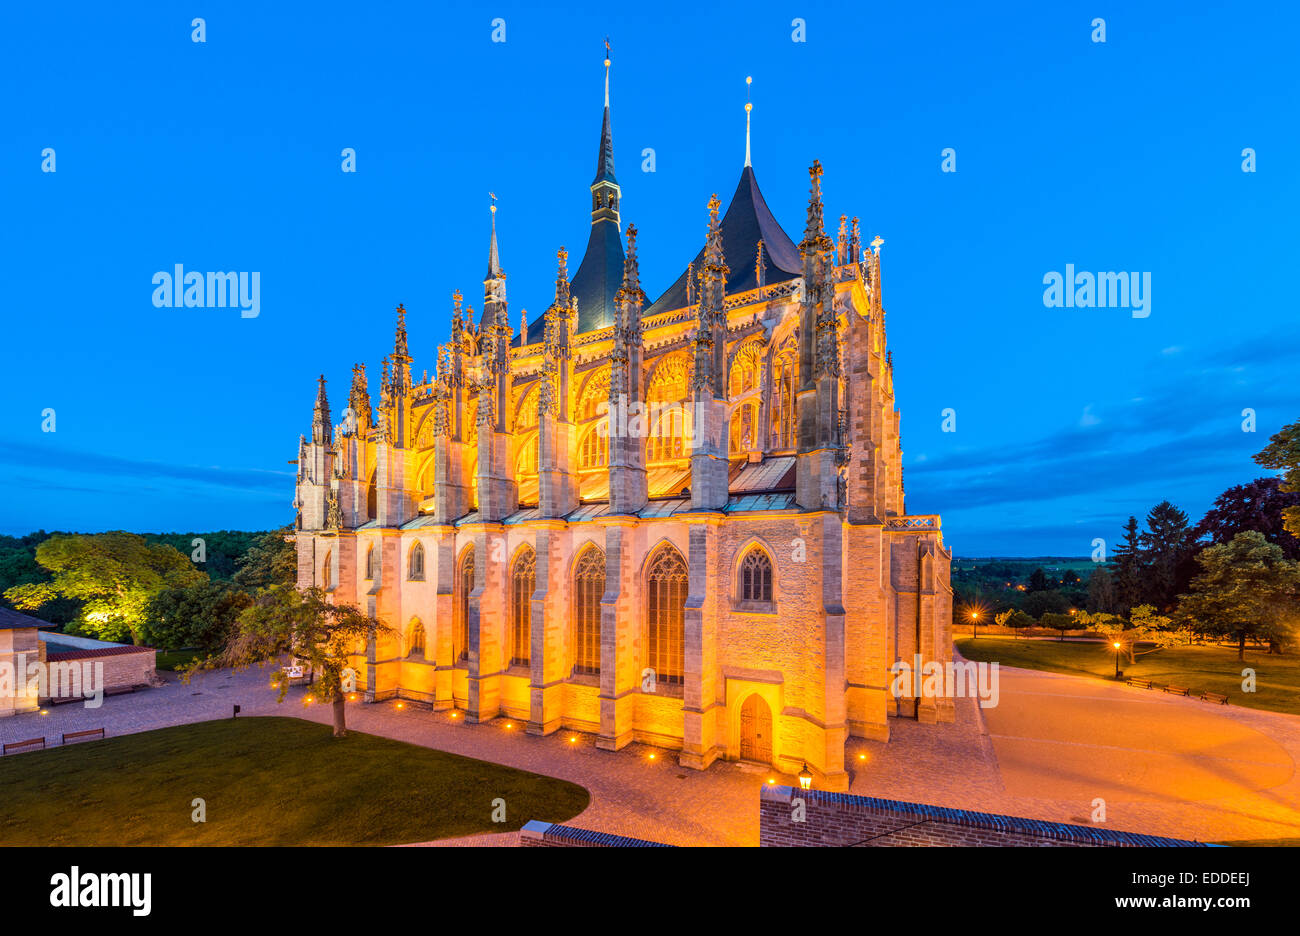 Catedral de Santa Bárbara, Kutná Hora, Bohemia Central, República Checa Foto de stock